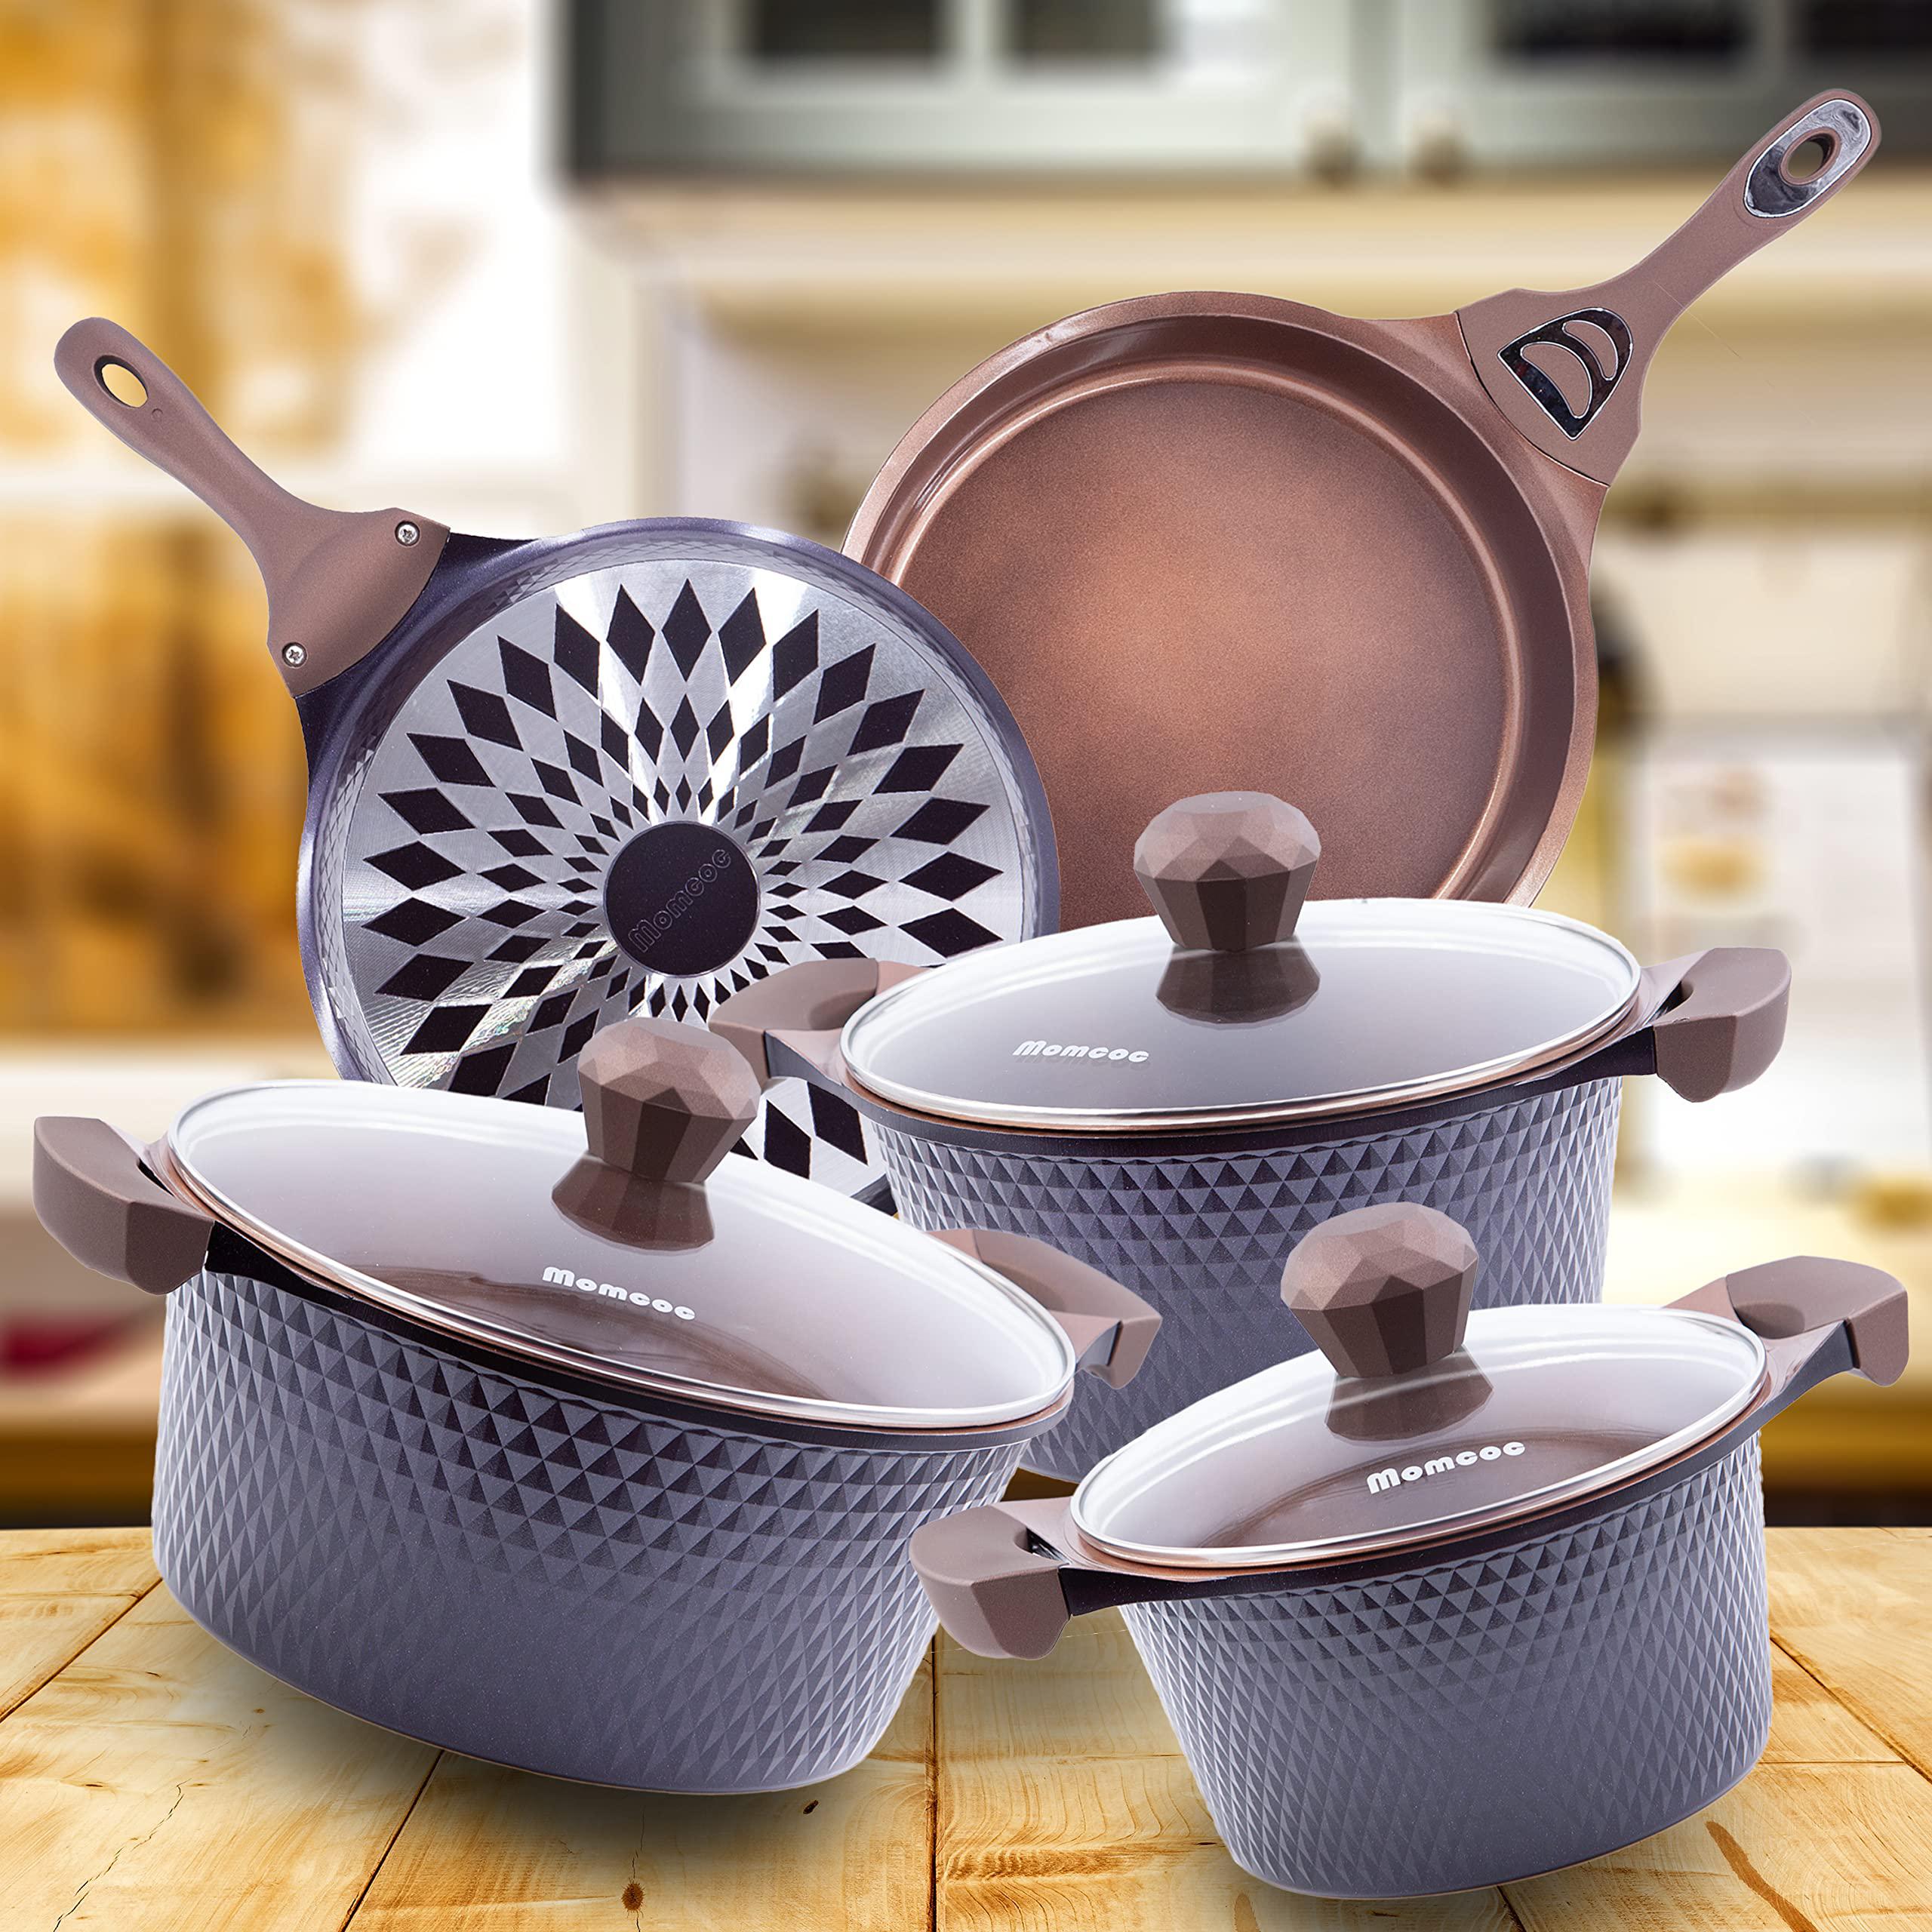 EMB ceramic diamond pots and pans sets- 8 piece nonstick kitchen